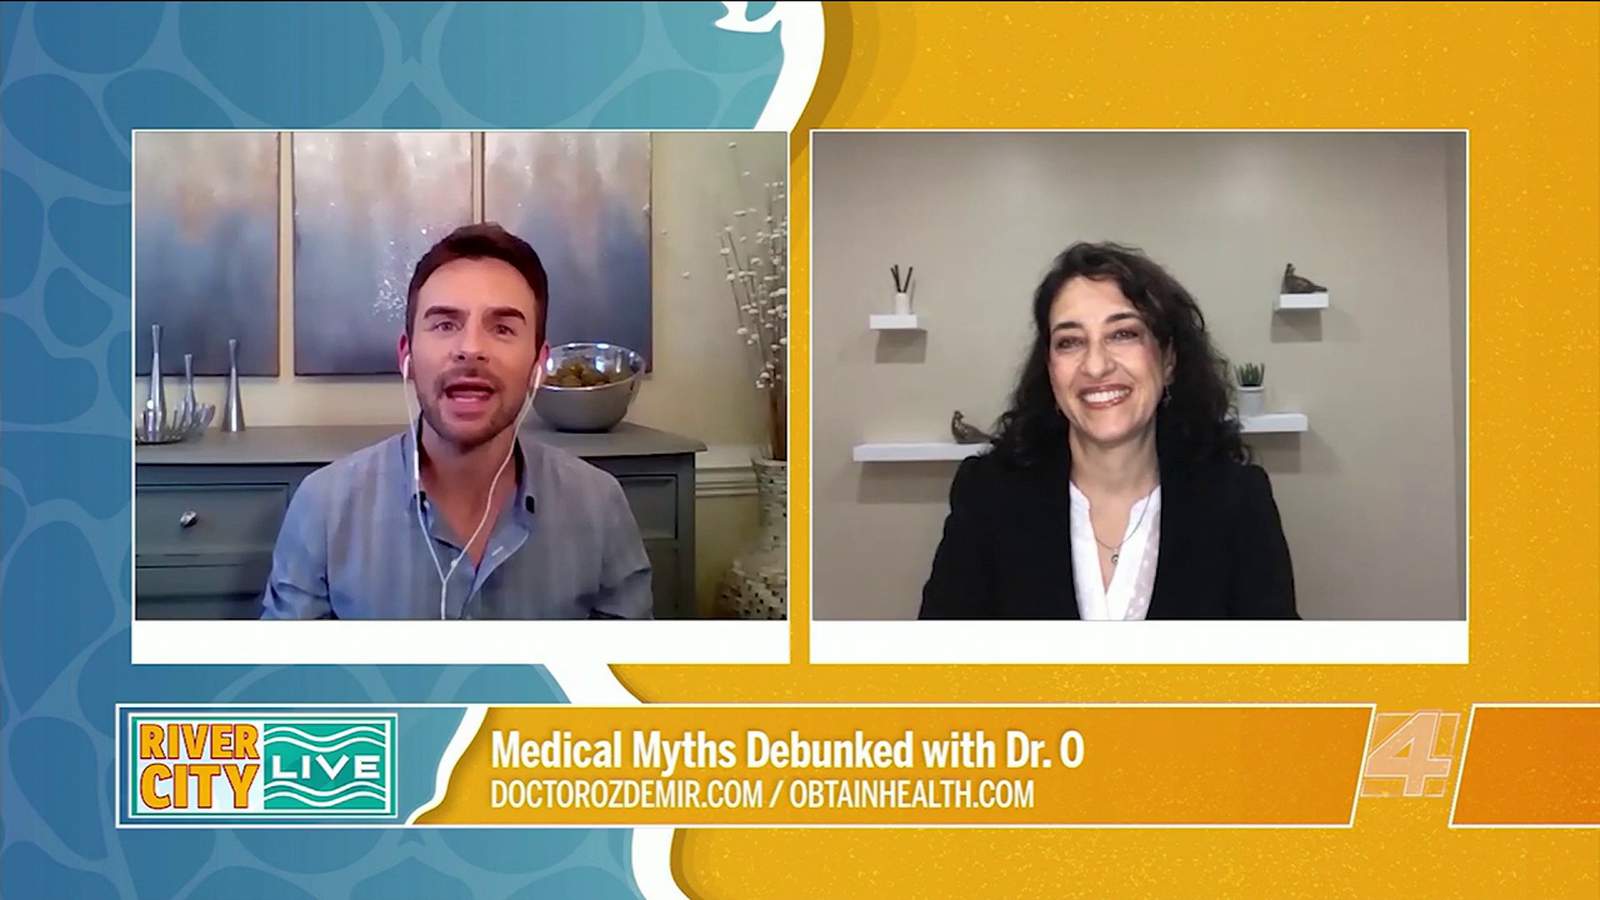 Medical Myths Debunked with Dr. O | River City Live